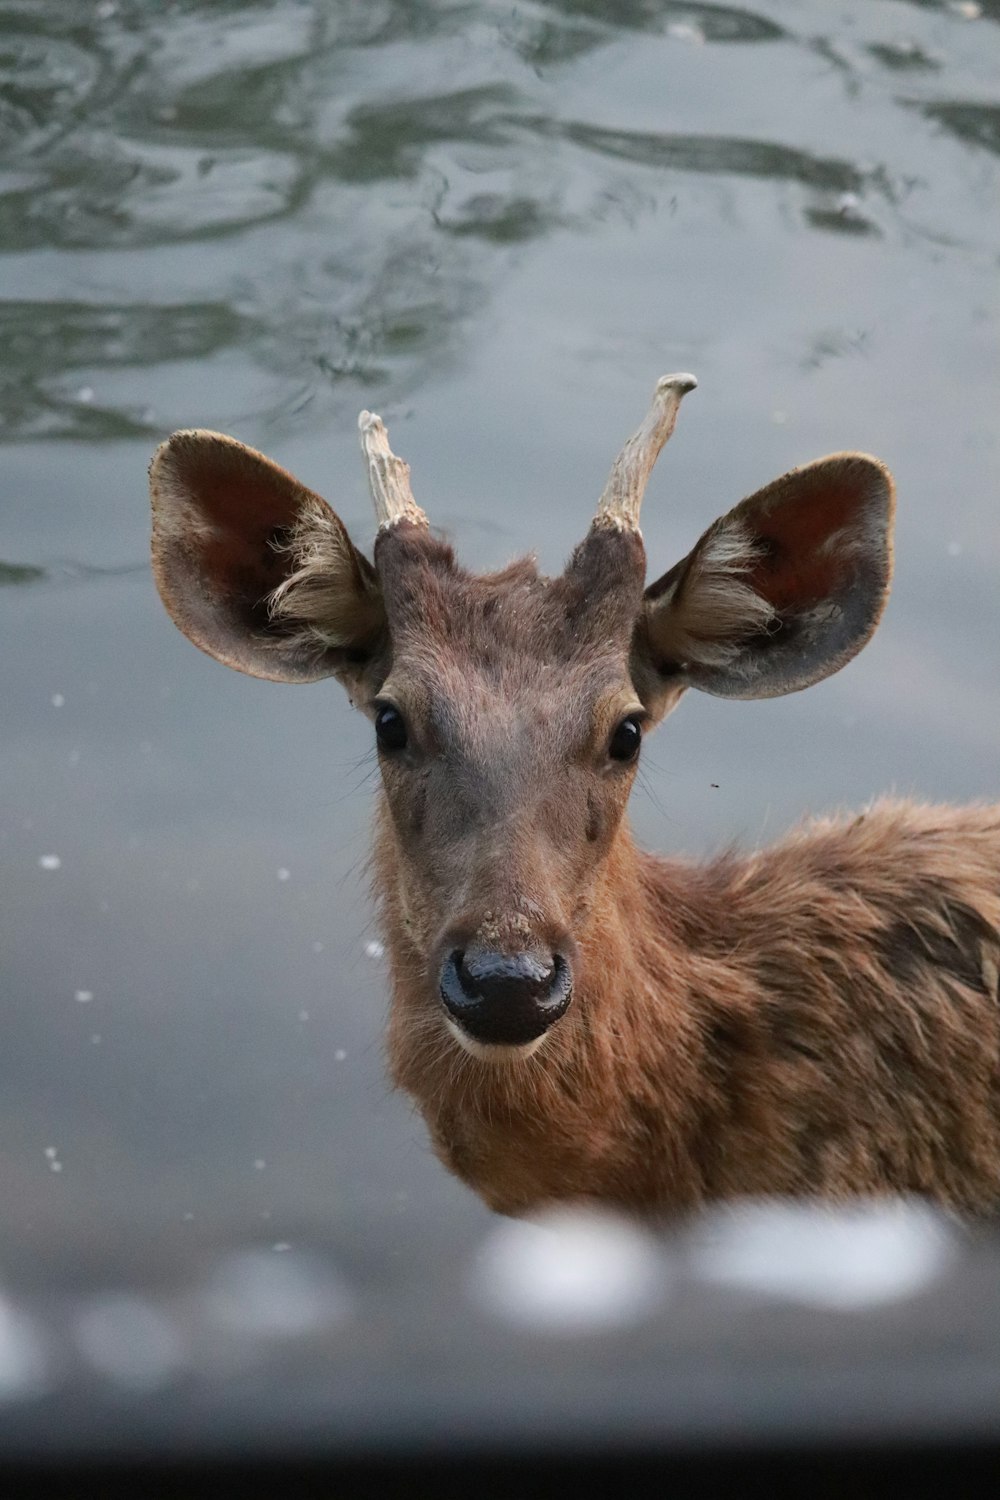 a deer is standing in a body of water